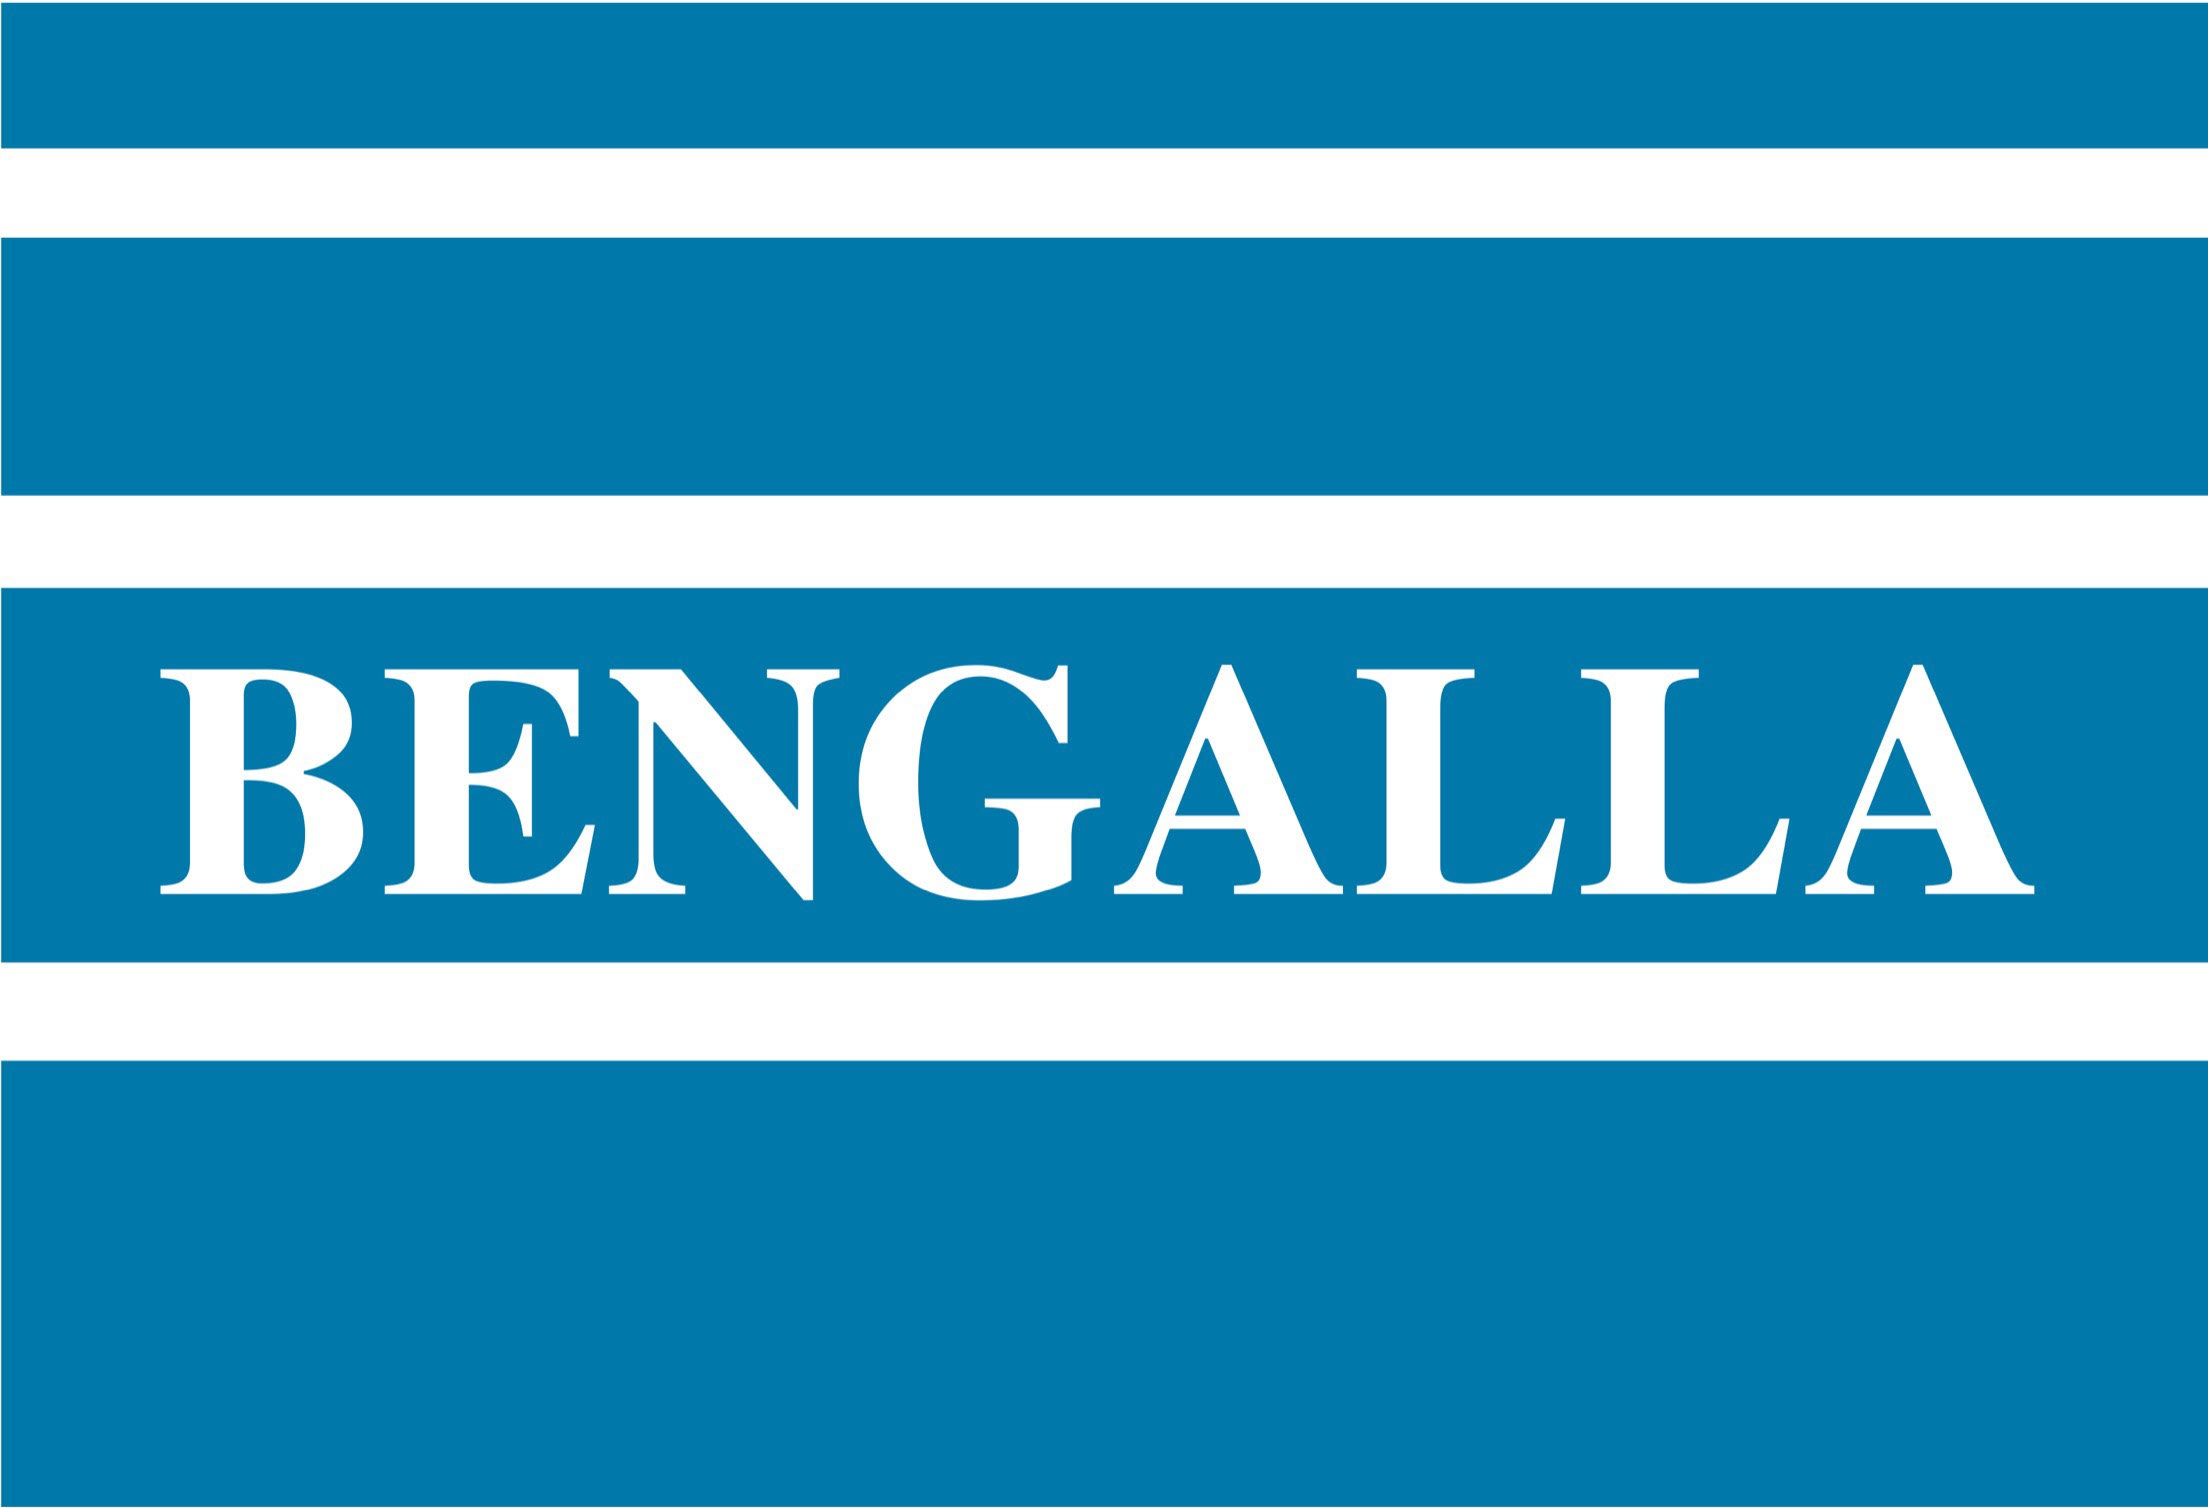 Bengalla